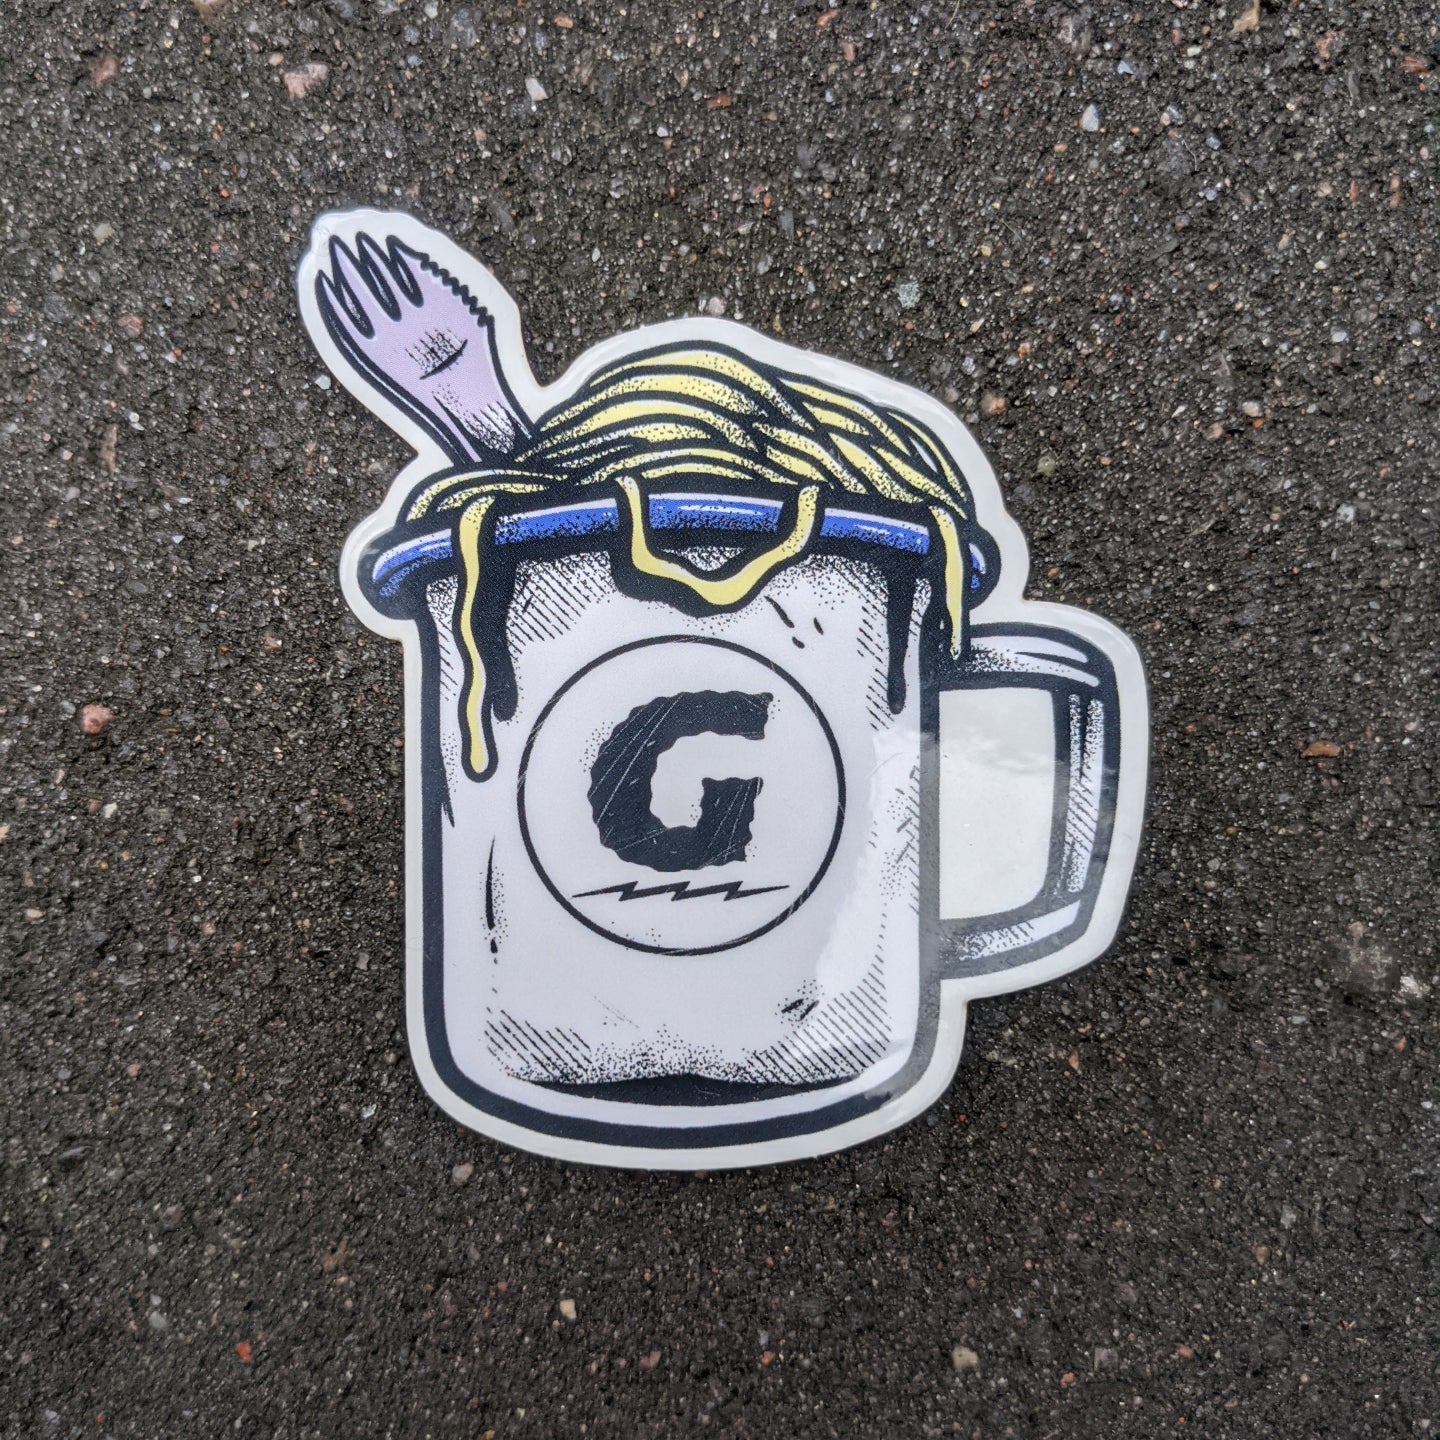 Grepp campfire mug sticker